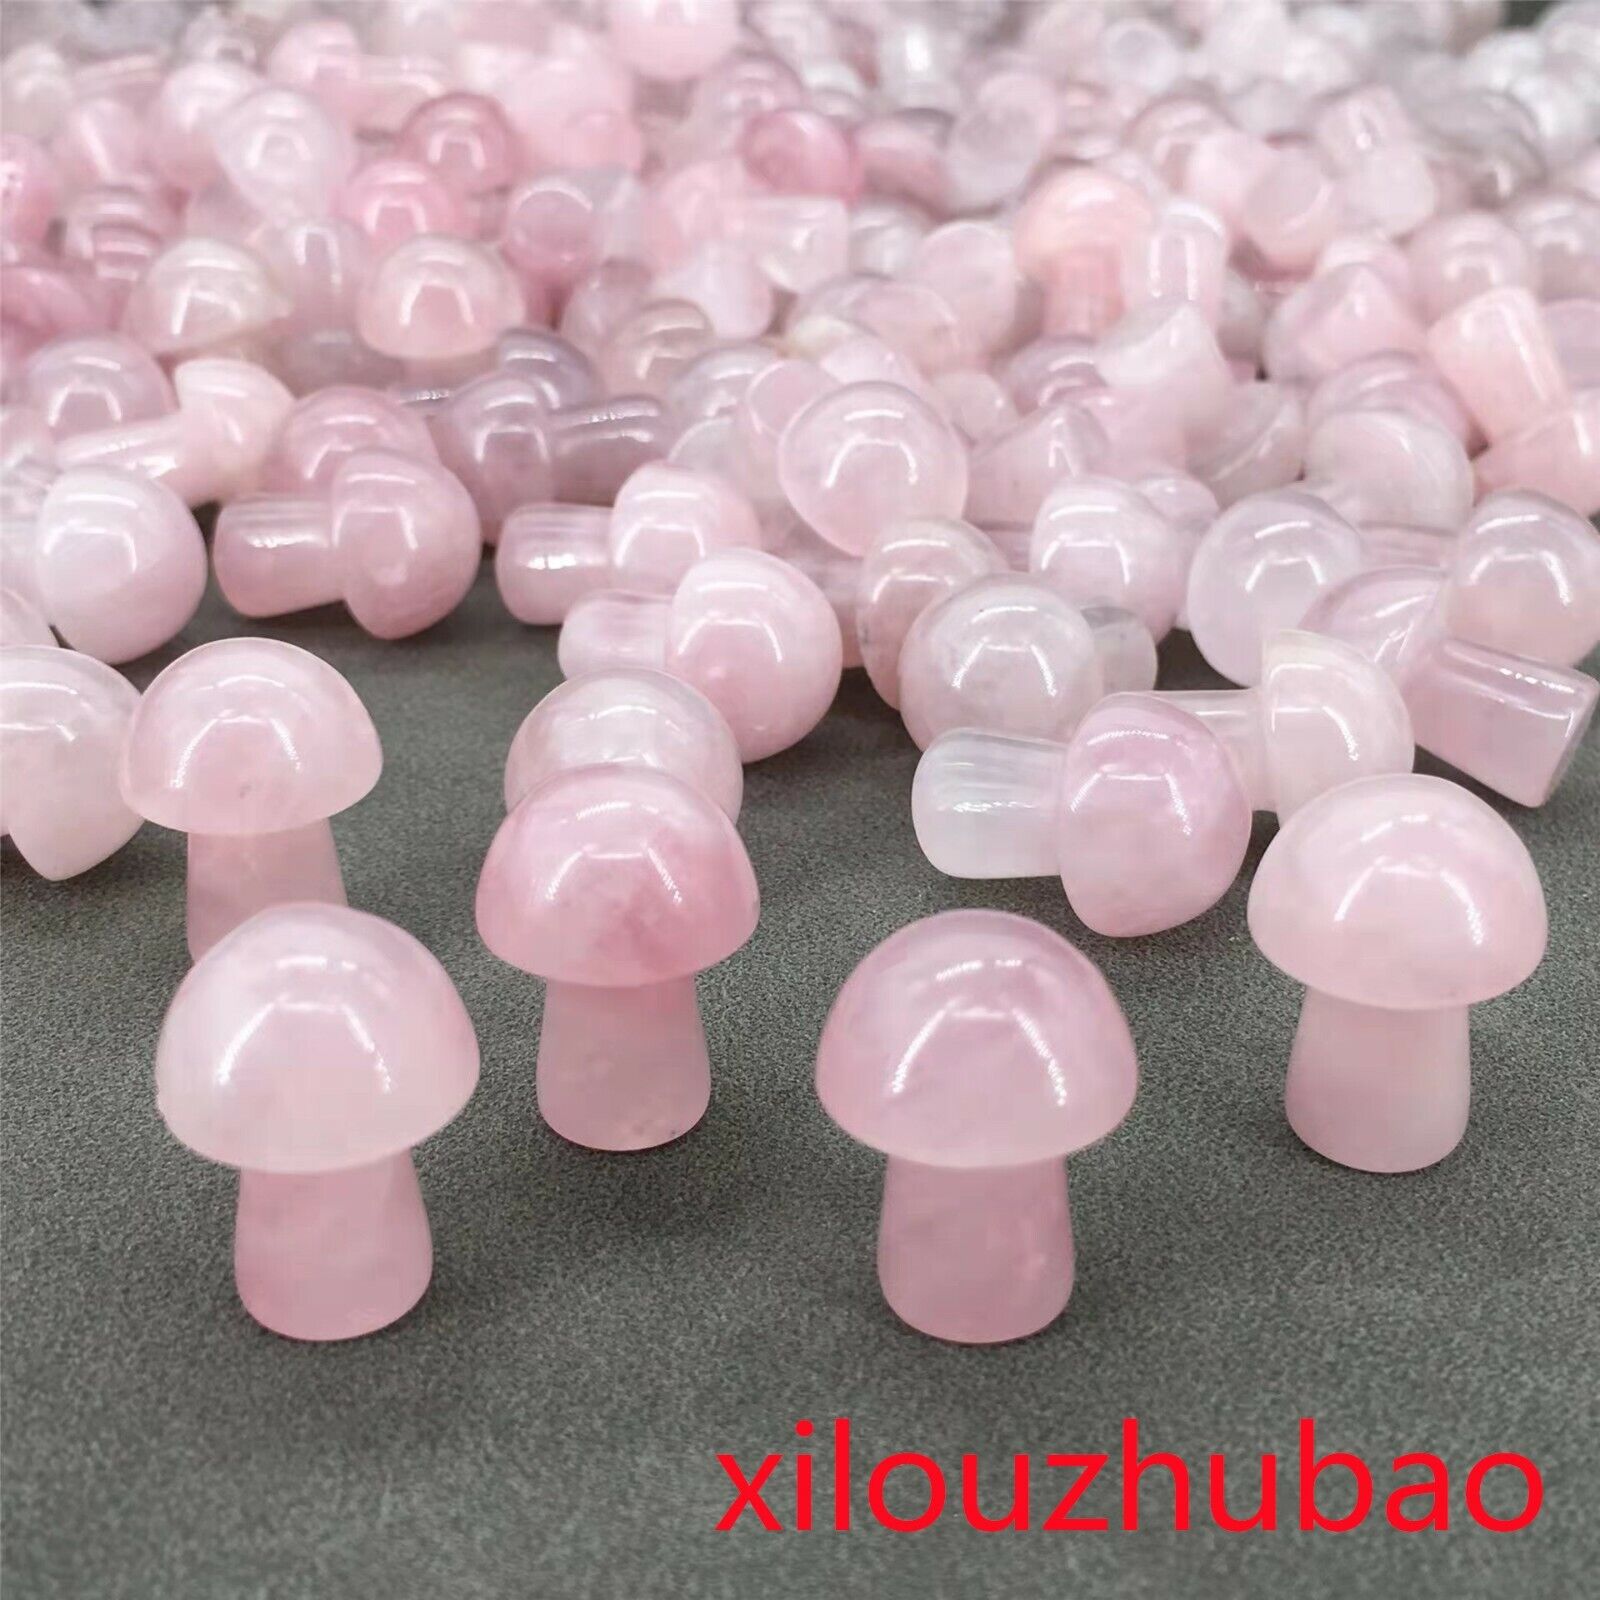 50PC Natural Pink roses Quartz Crystal Mushroom/Carved Reiki Healing